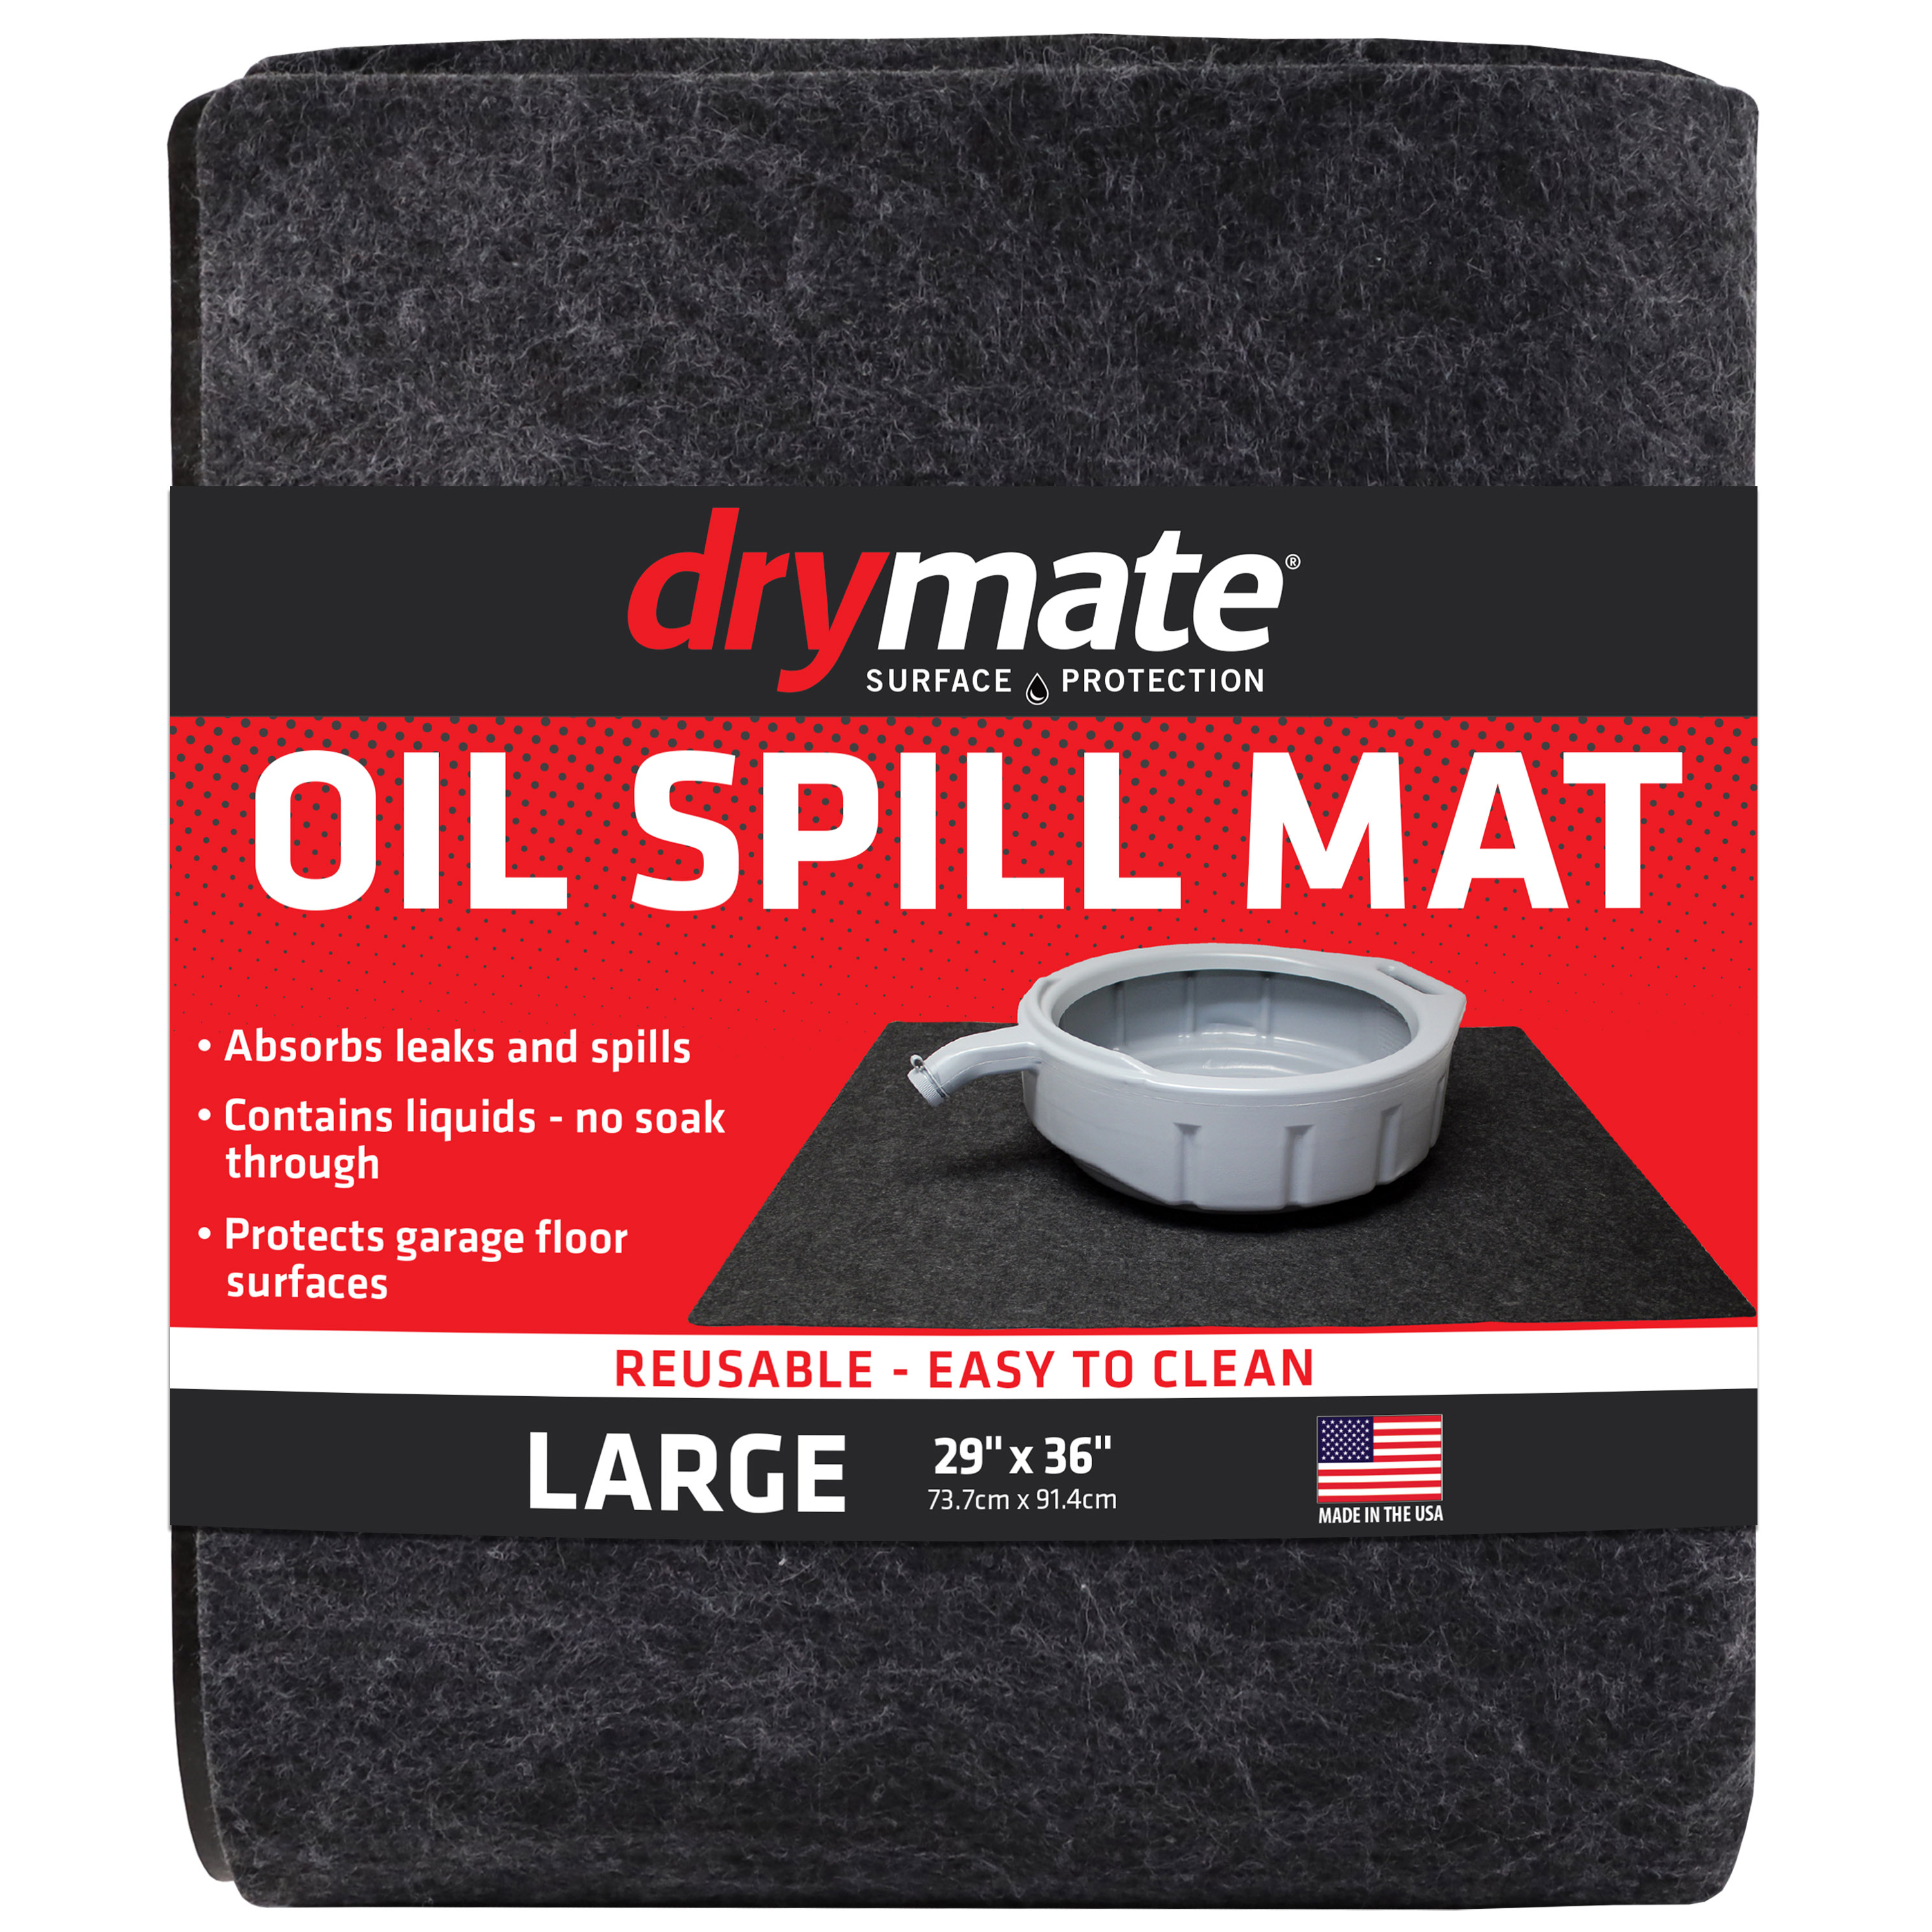 https://drymate.com/wp-content/uploads/2017/10/1-Drymate-Oil-Spill-Mat-absrobent-drip-floor-surface-garage-protection-pad-waterproof-reusable-durable-maintenance-1-1.png